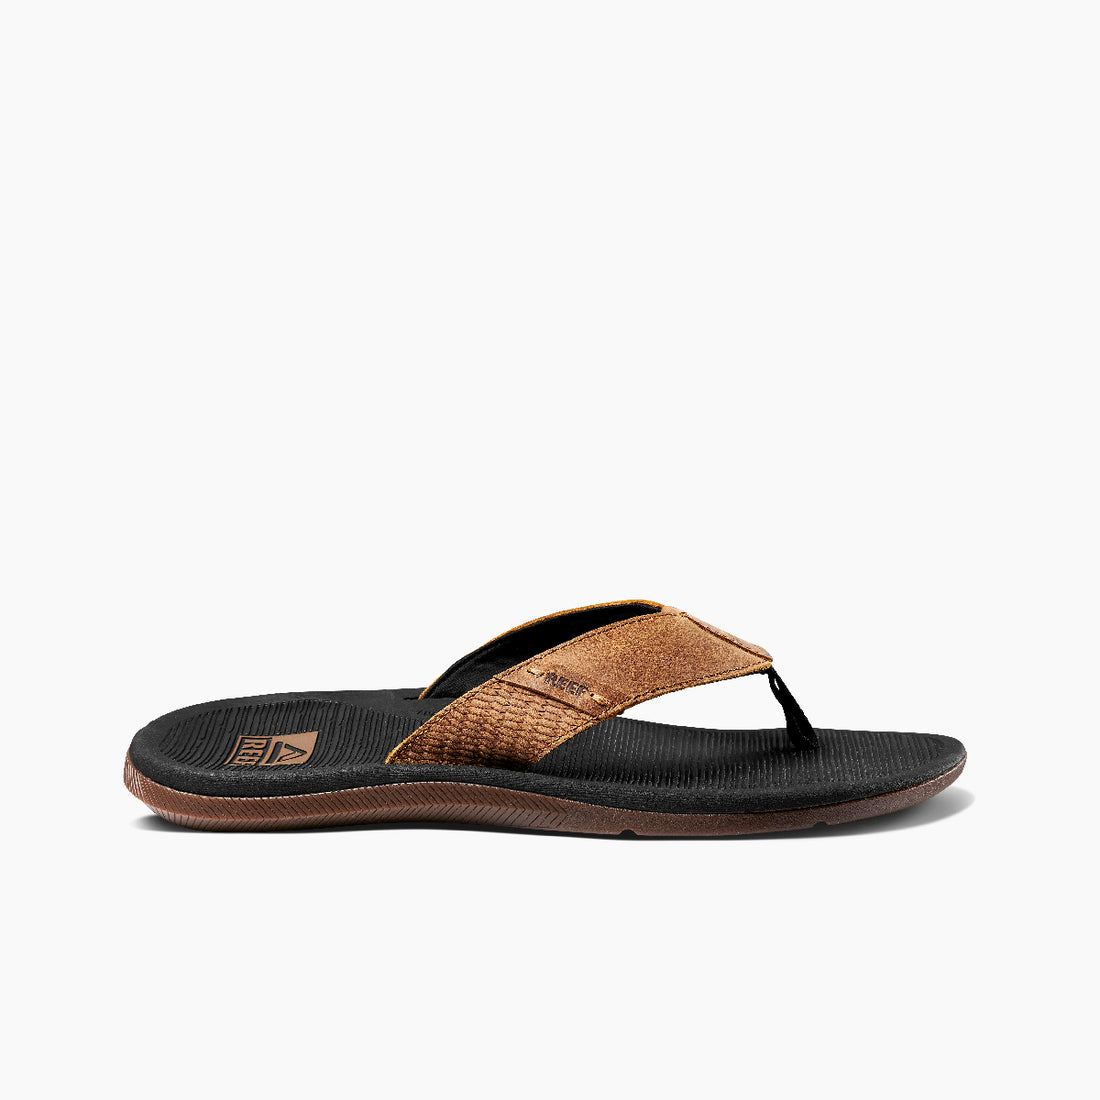 Reef Men's Santa Ana LE Premium Leather Flip Flop Sandals Black And Tan - CI8103 Black And Tan - Black And Tan, 8